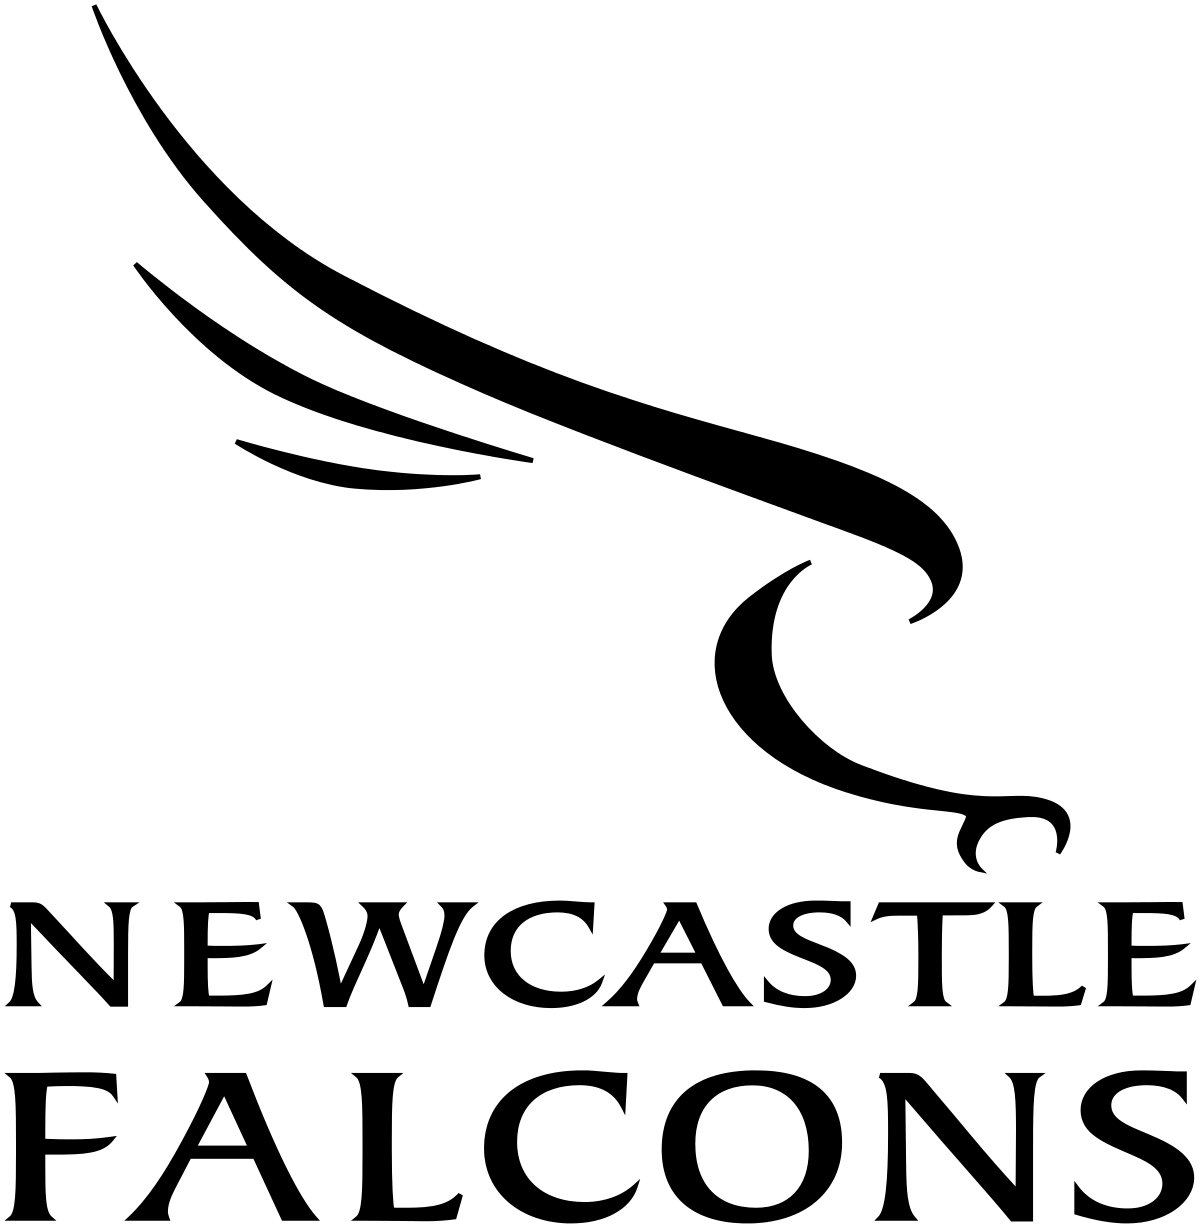 White Falcons Logo - Newcastle Falcons